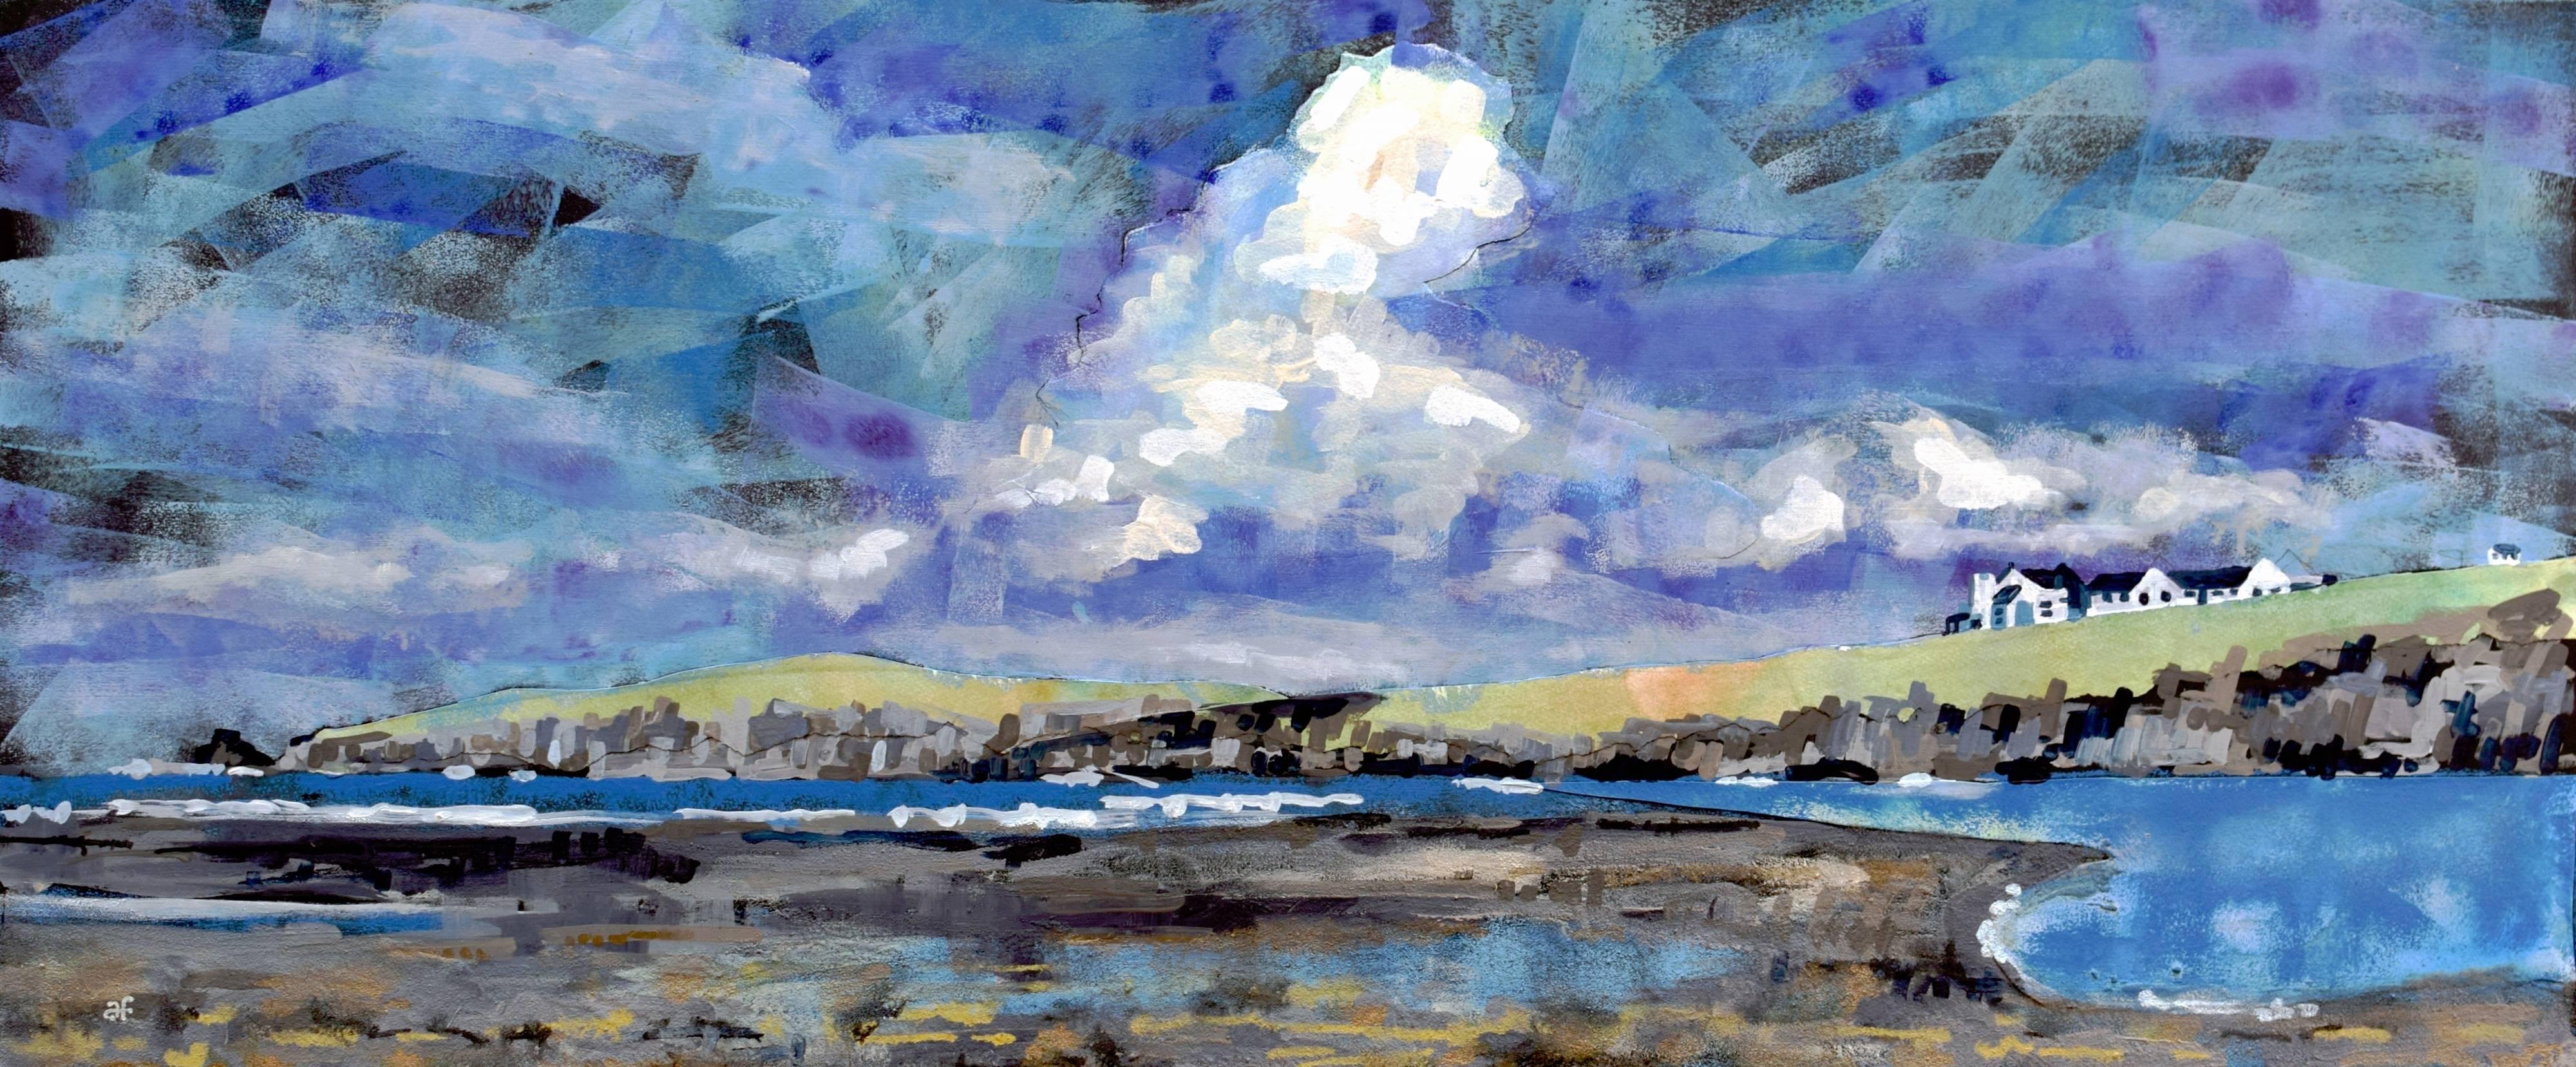 Andrew Francis Landscape Painting - Ynys Aberteifi Island: Contemporary British Coastal Landscape Oil Painting 